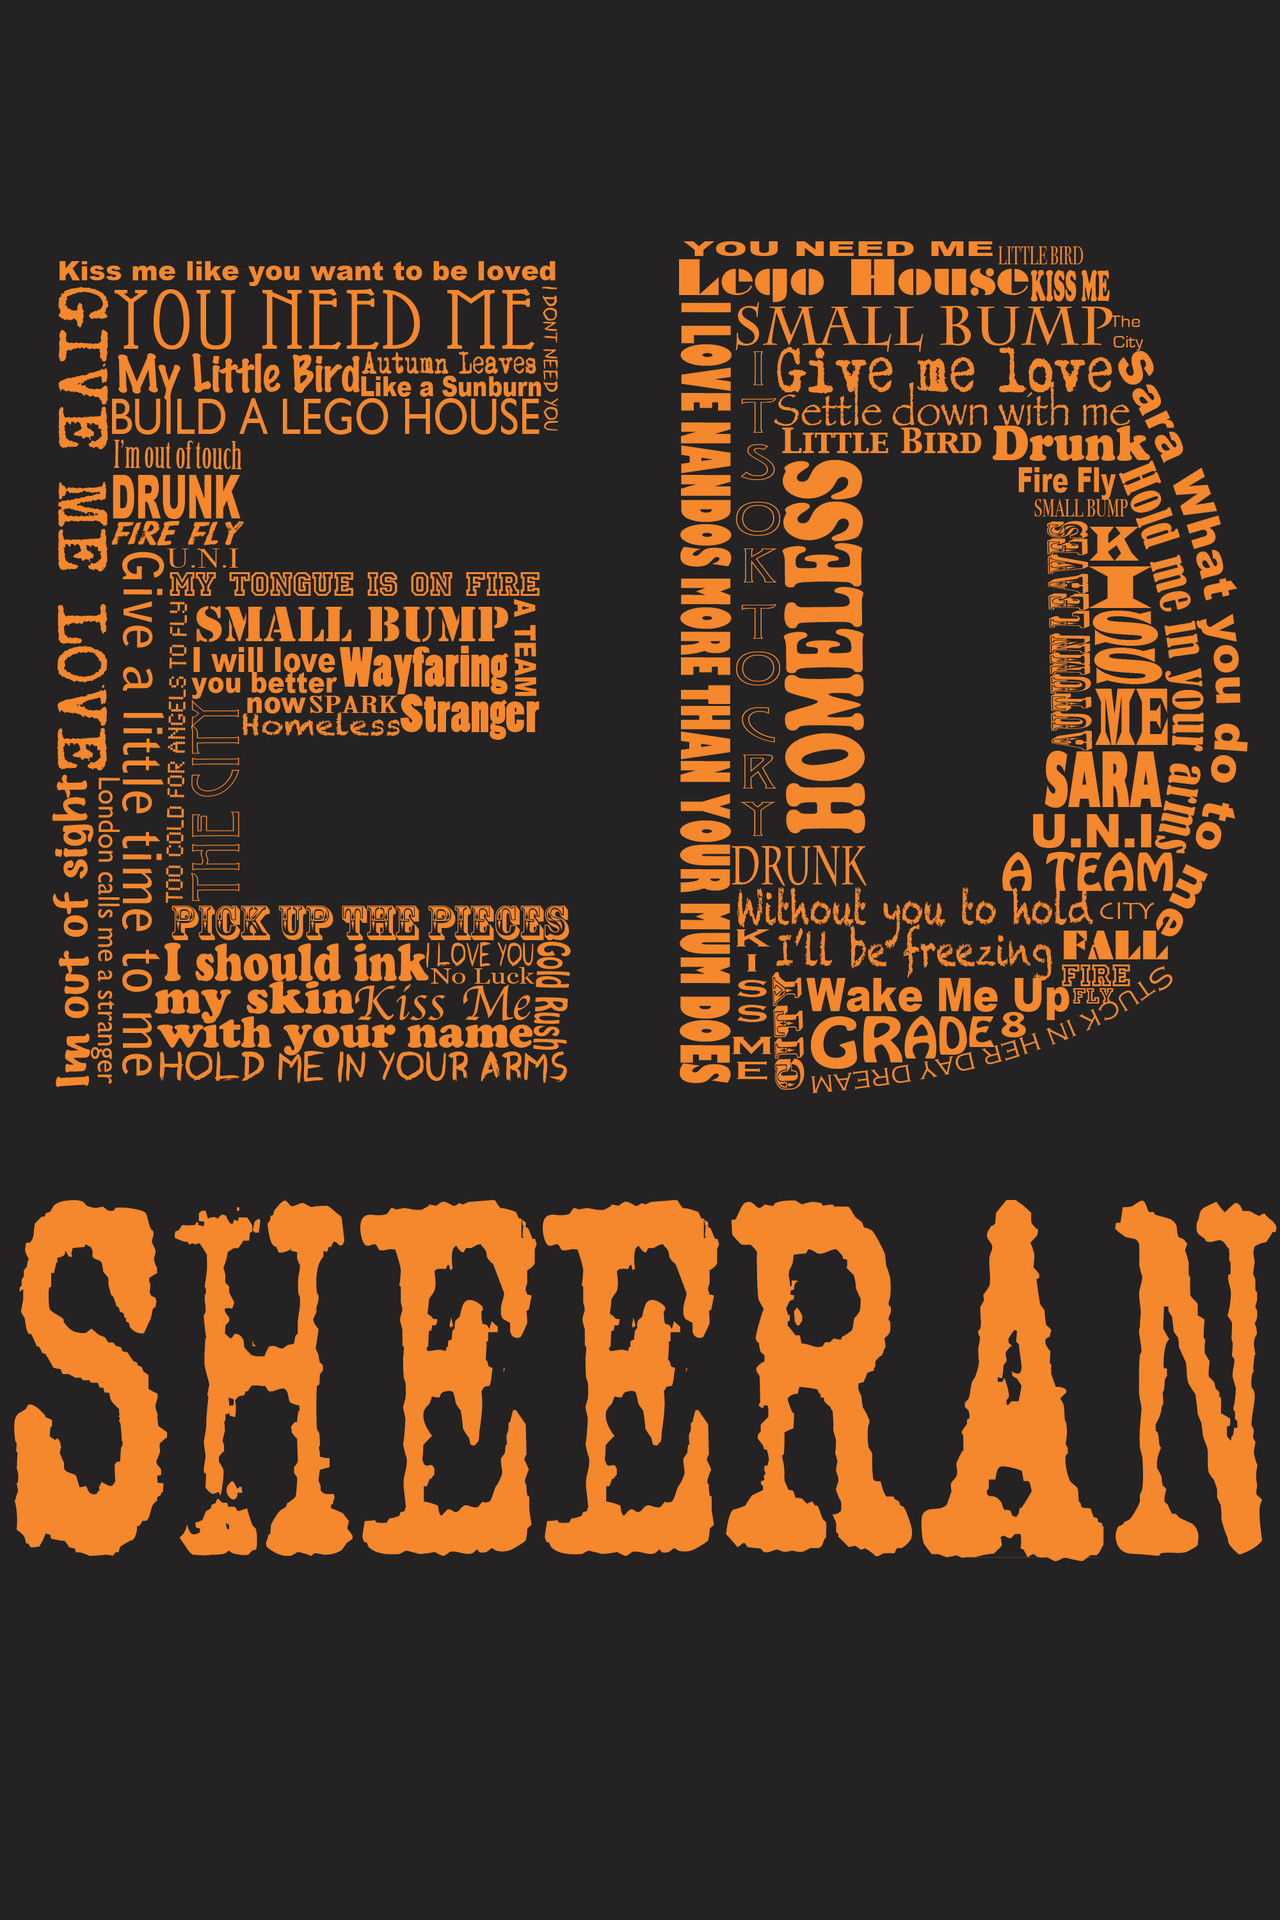 ed Sheeran Tumblr Wallpaper Image Include ed Sheeran